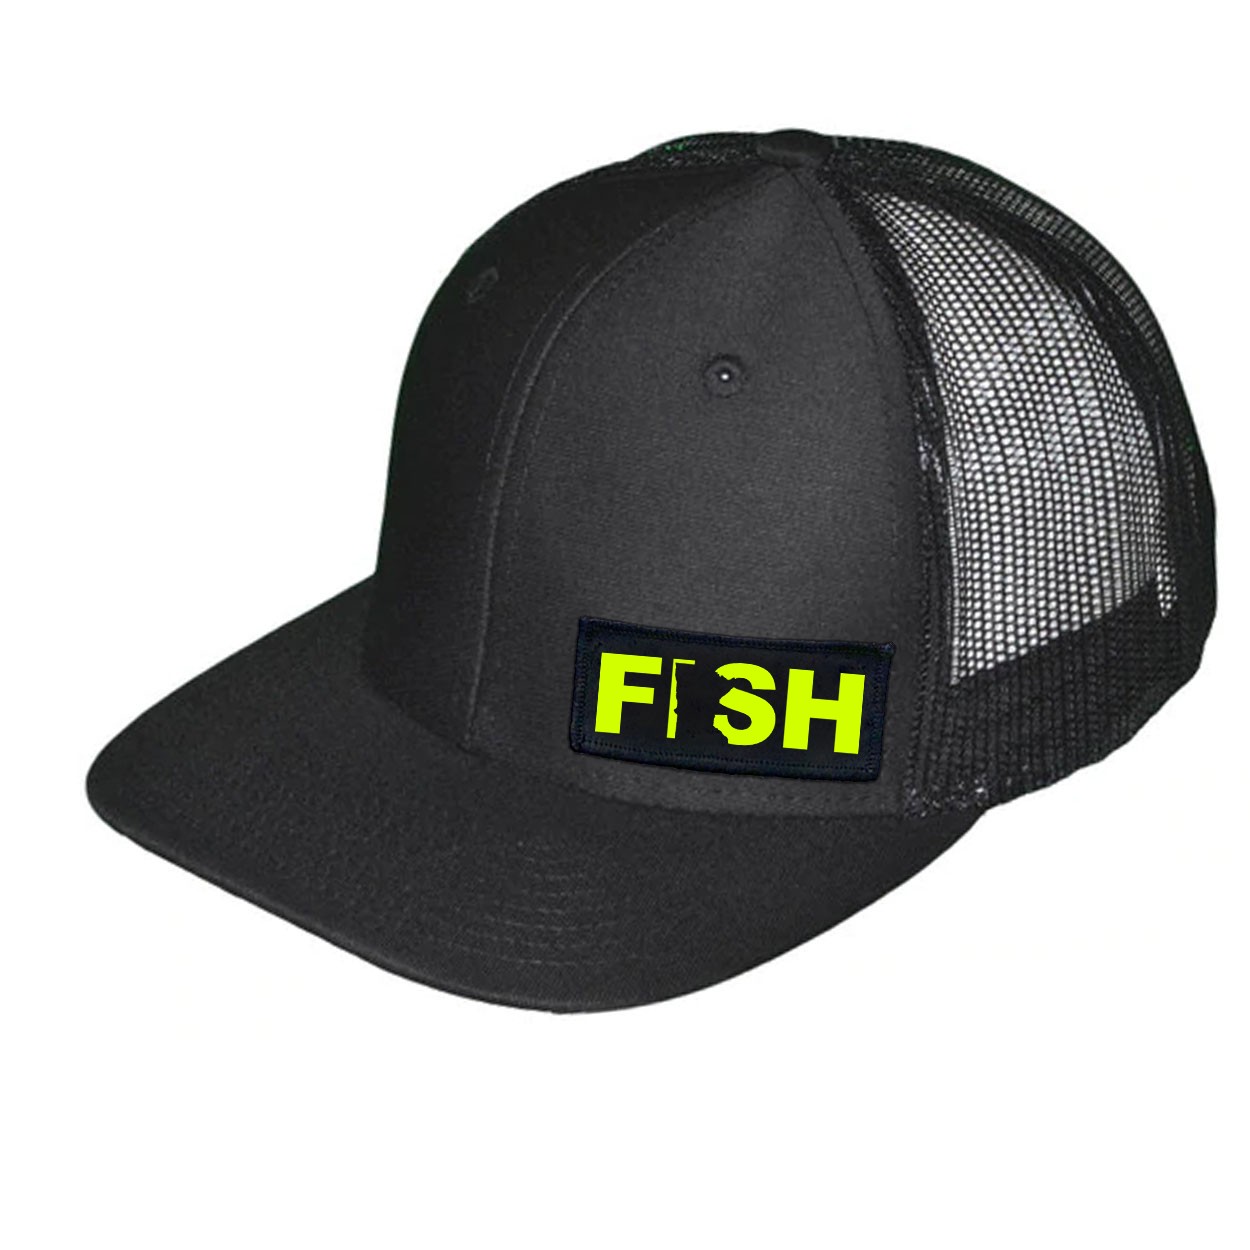 Fish Minnesota Night Out Woven Patch Snapback Trucker Hat Black (Hi-Vis Logo)